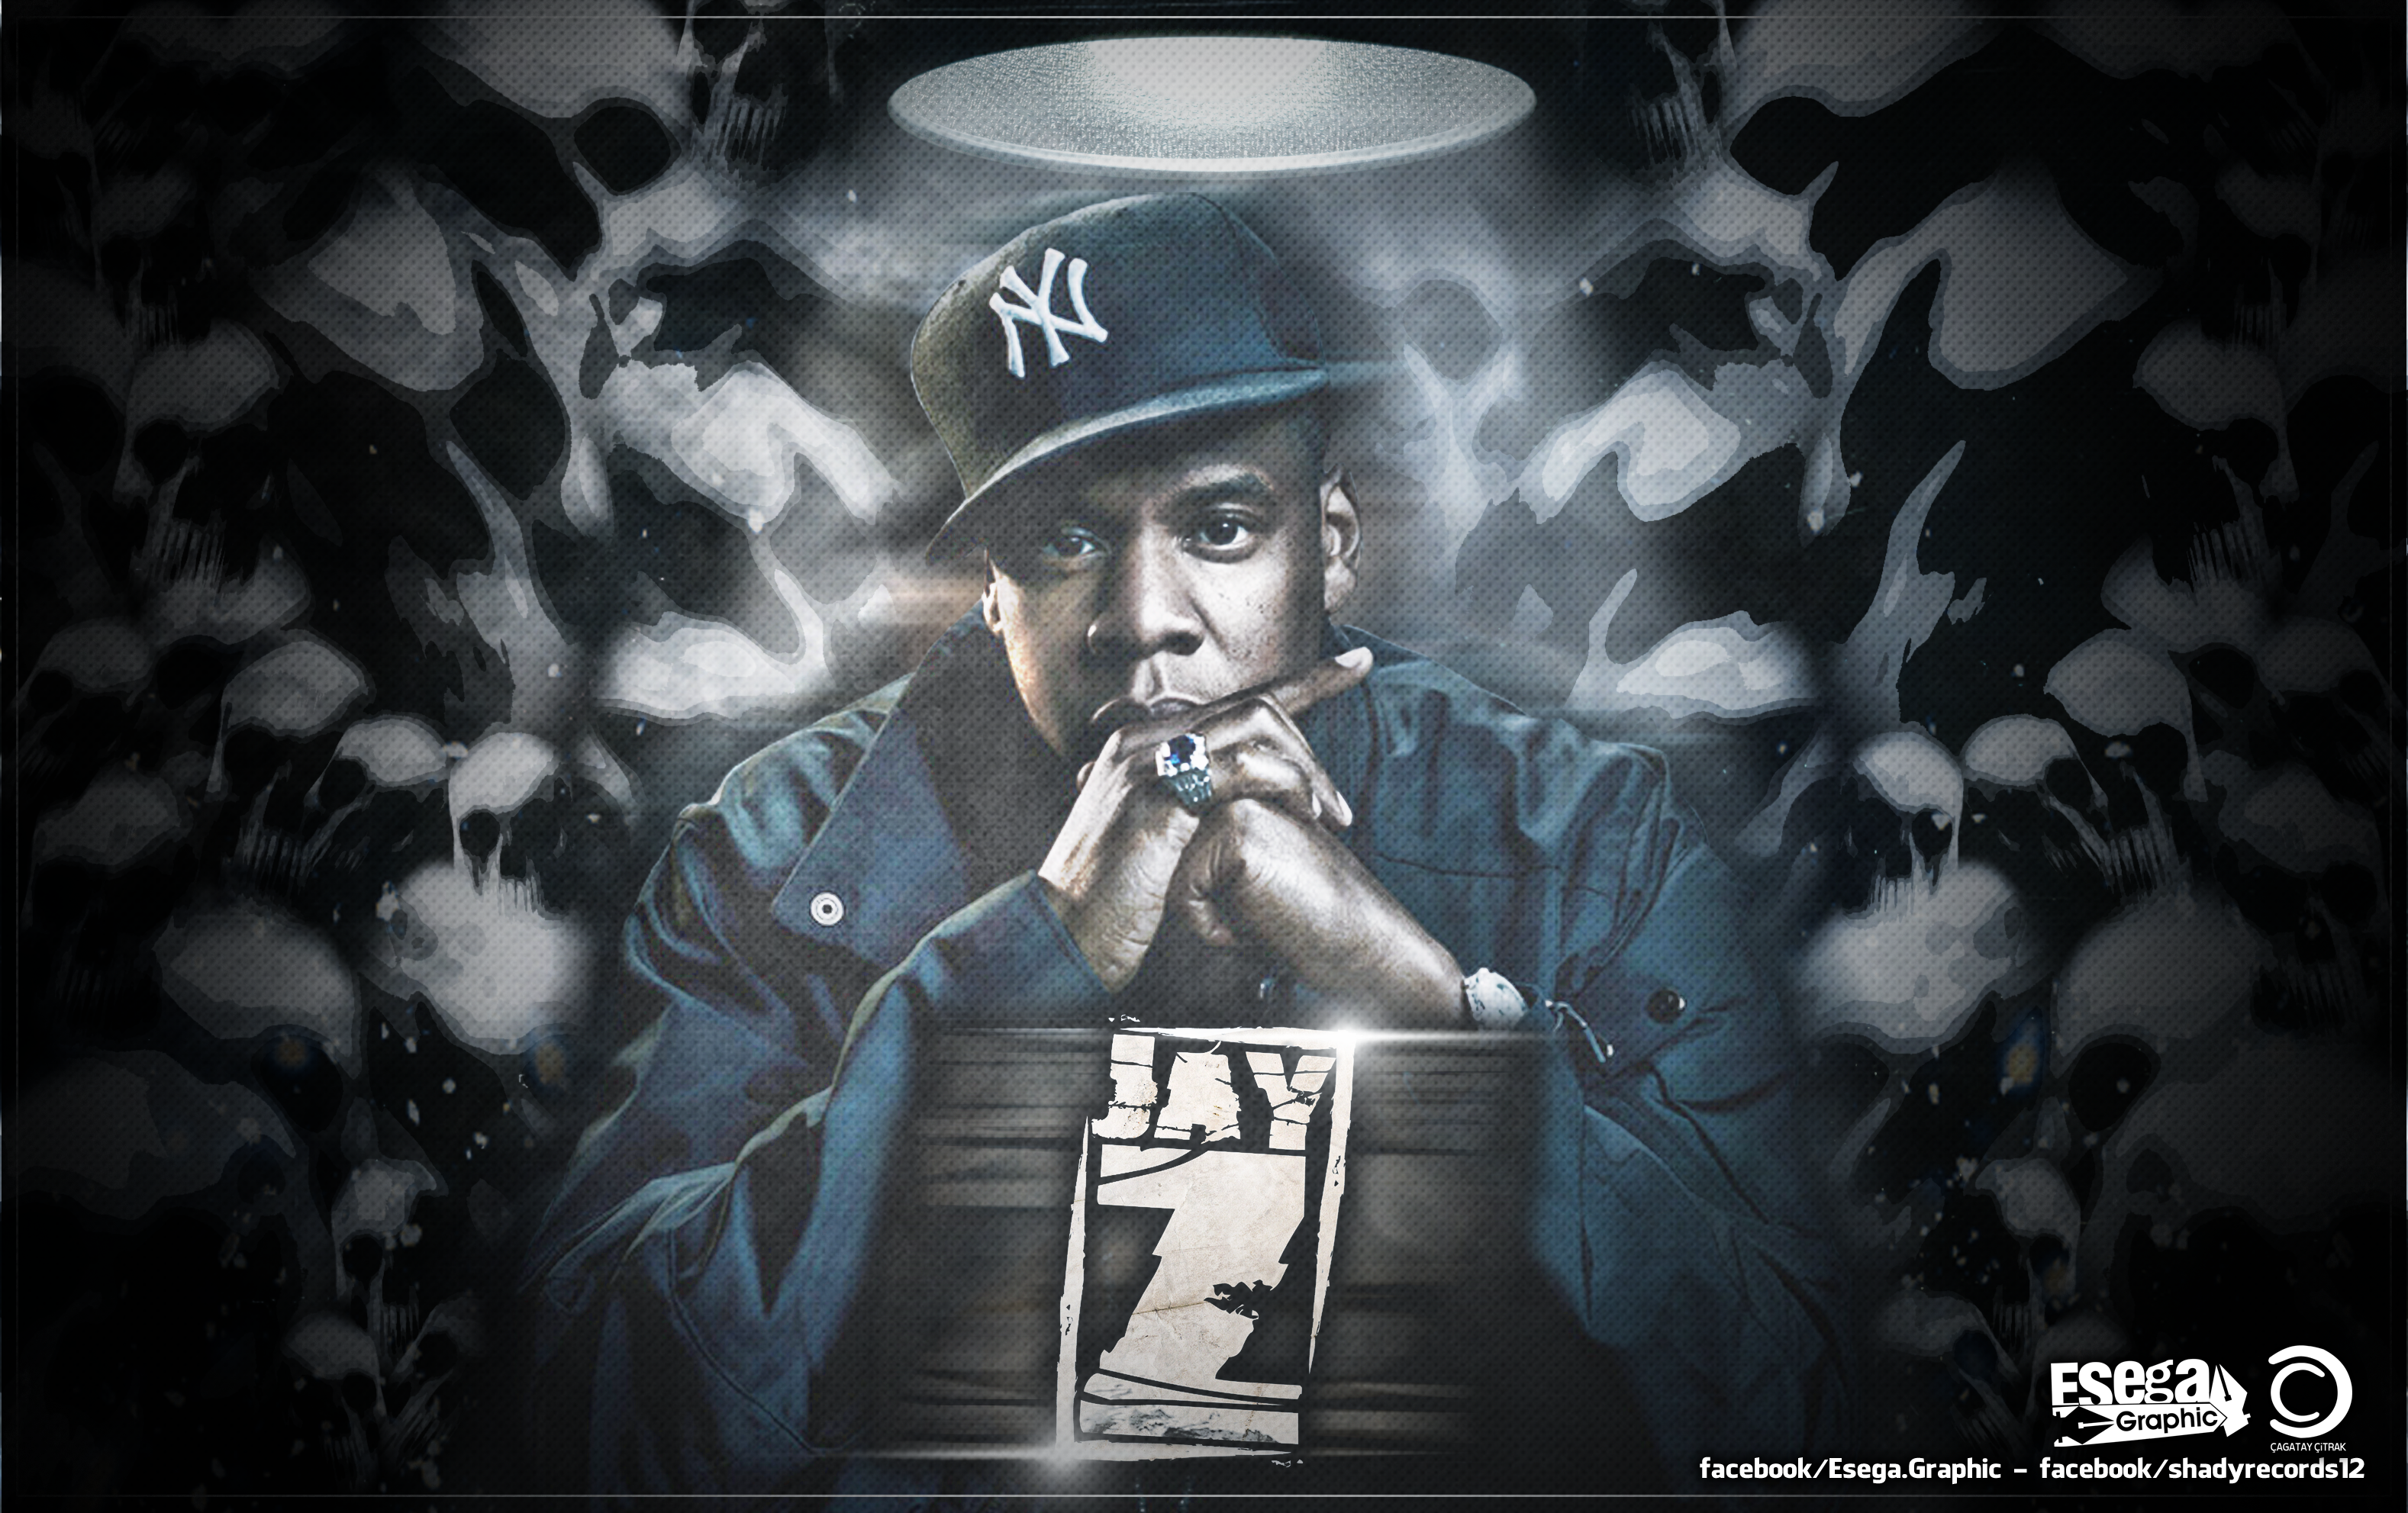 Jay Z Wallpaper Calismasi Esega Graphic Ft Cc By Esegagraphic On